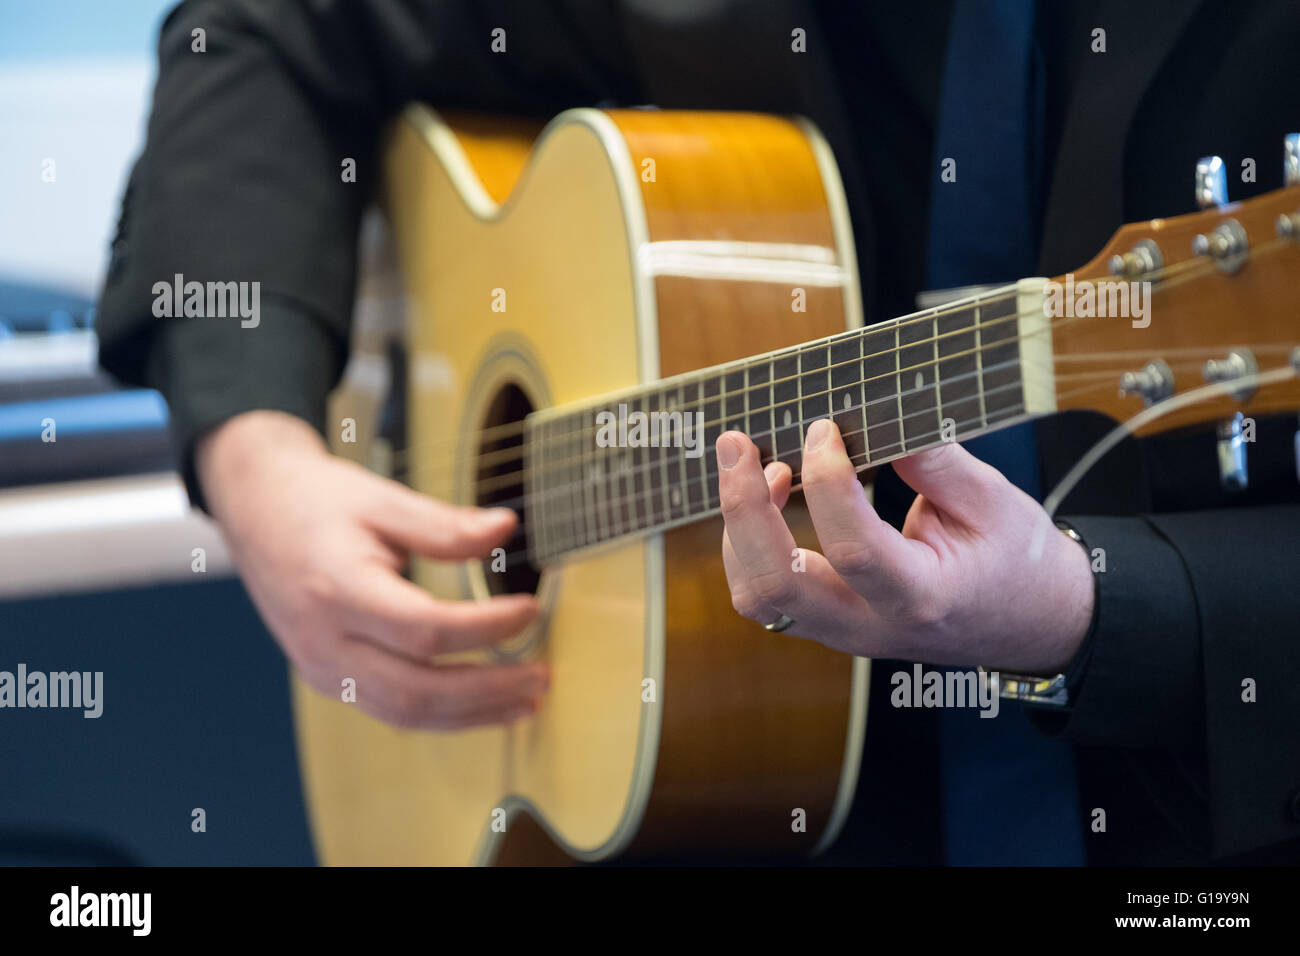 Man playing an accoustic guitar Stock Photo